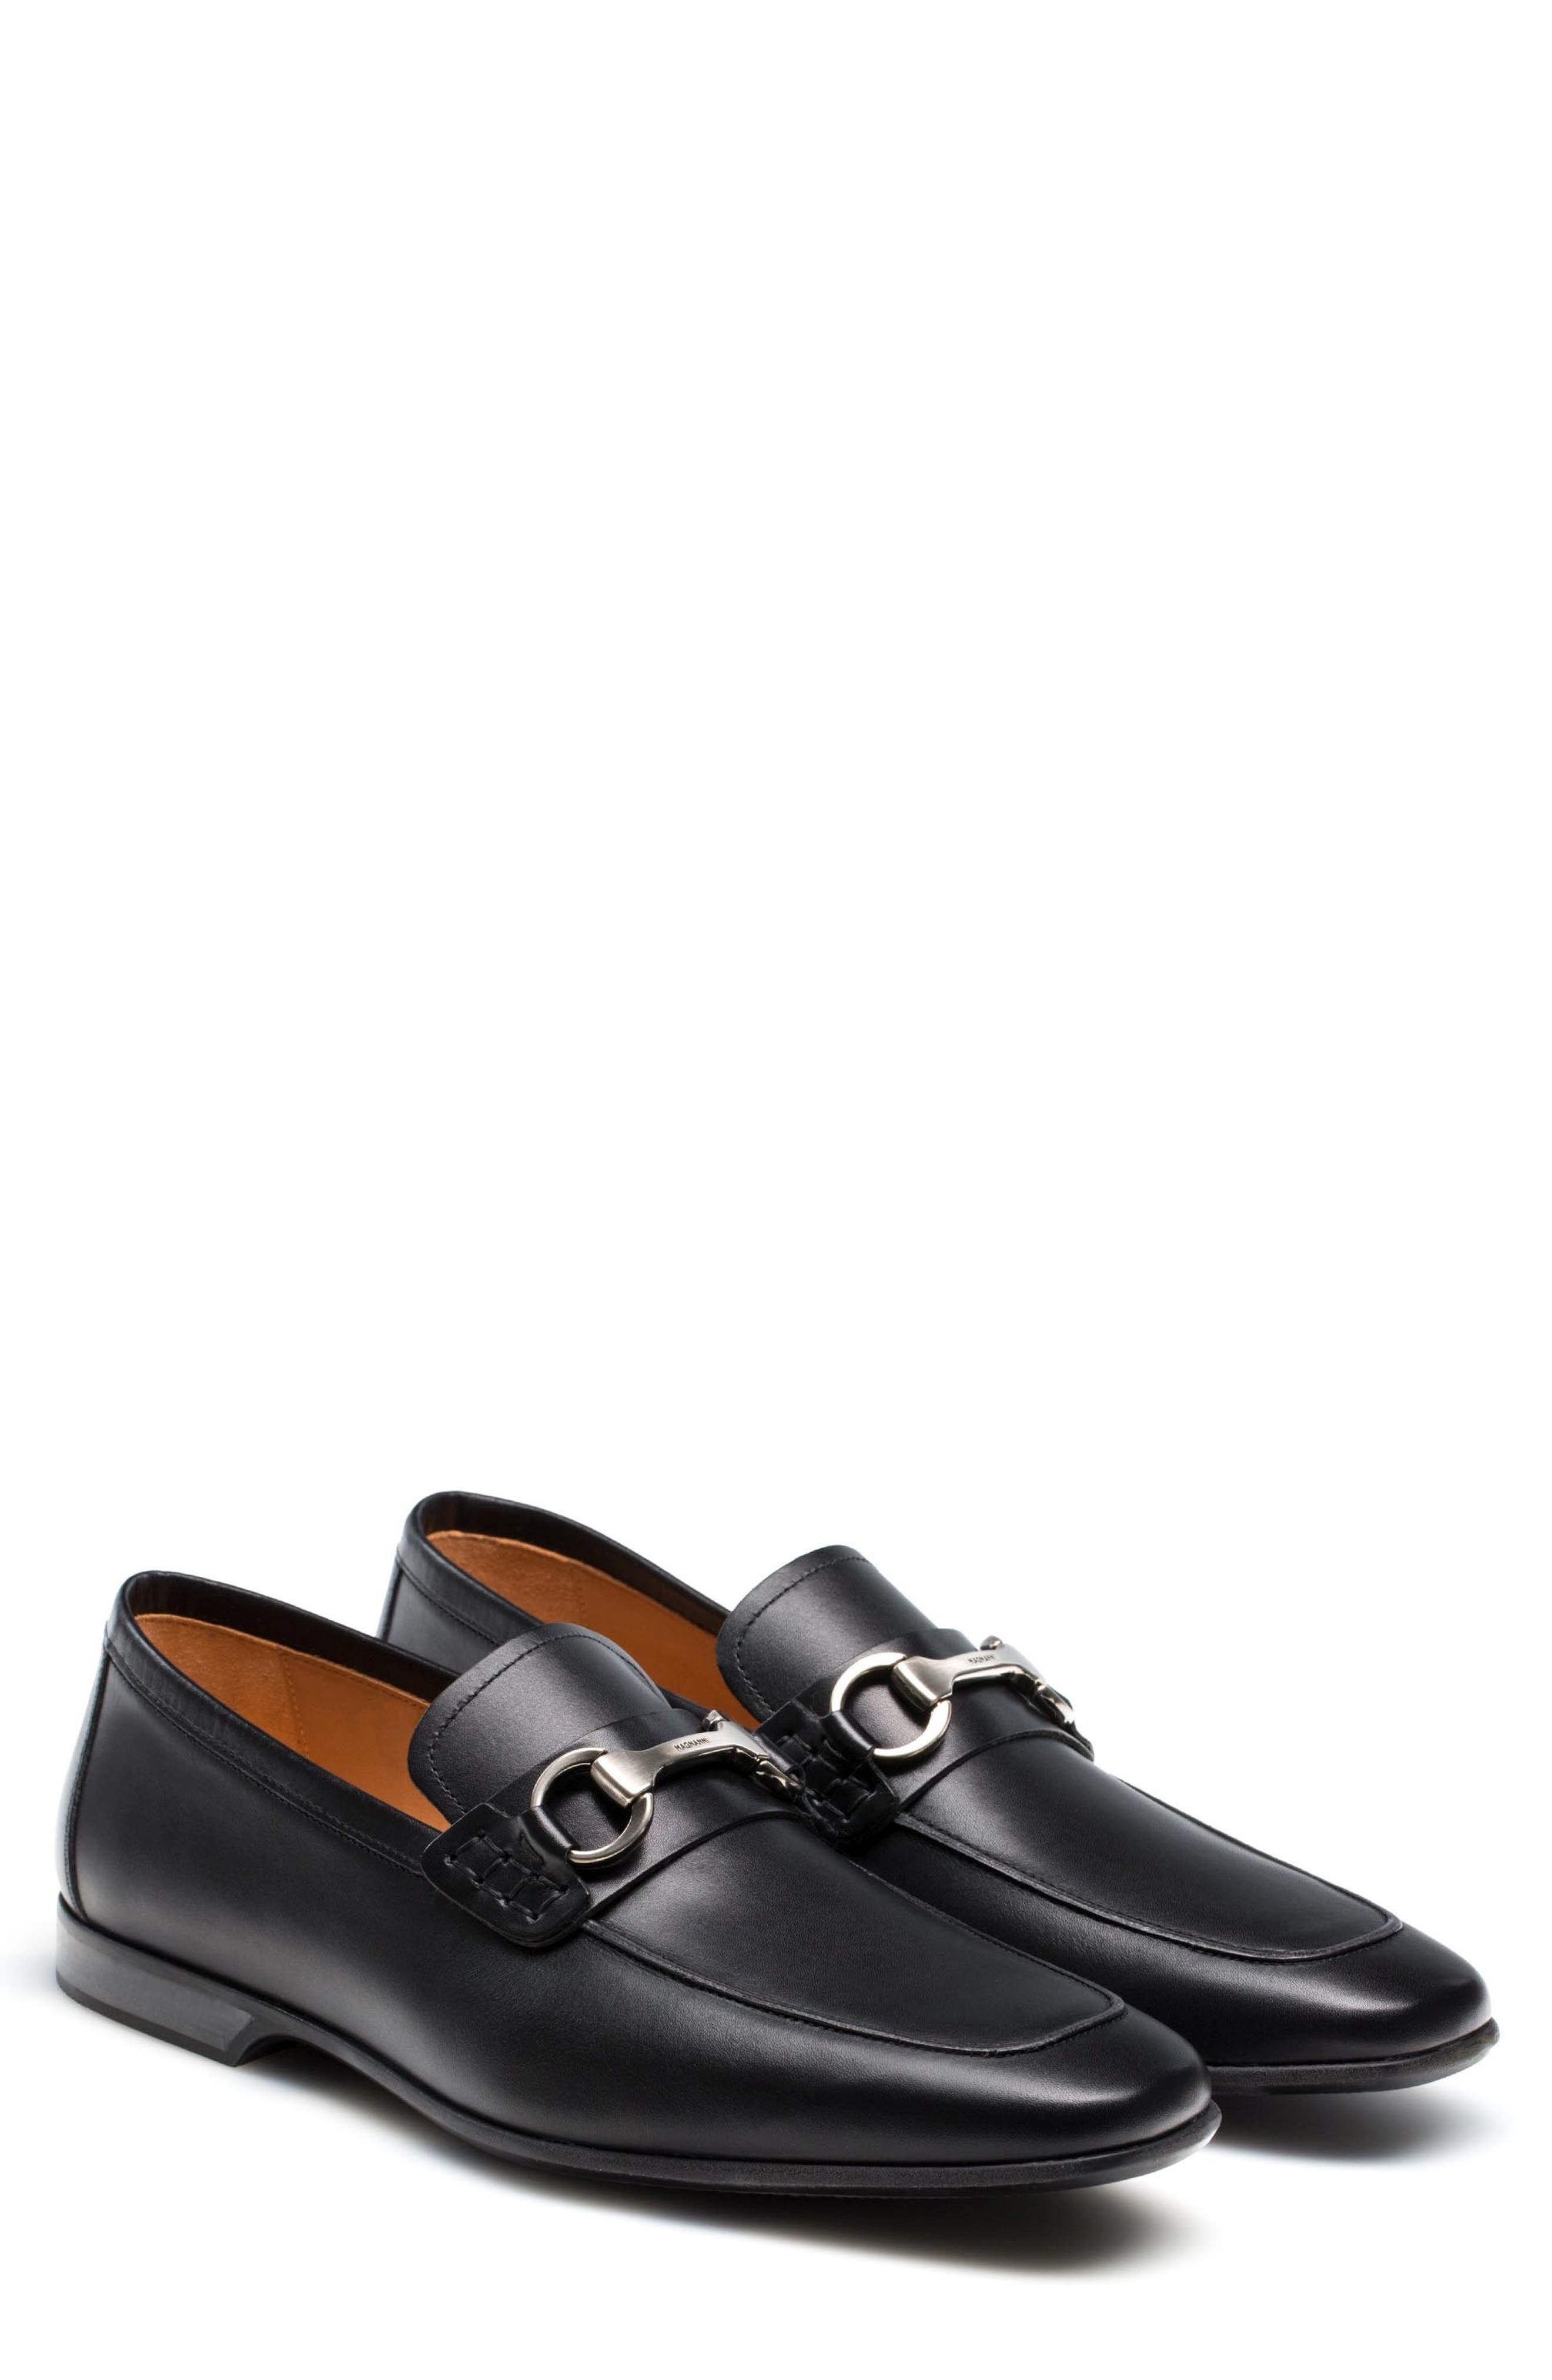 Mens Slip-on shoes Churchs Slip-on shoes Churchs Leather Shoes Black for Men 